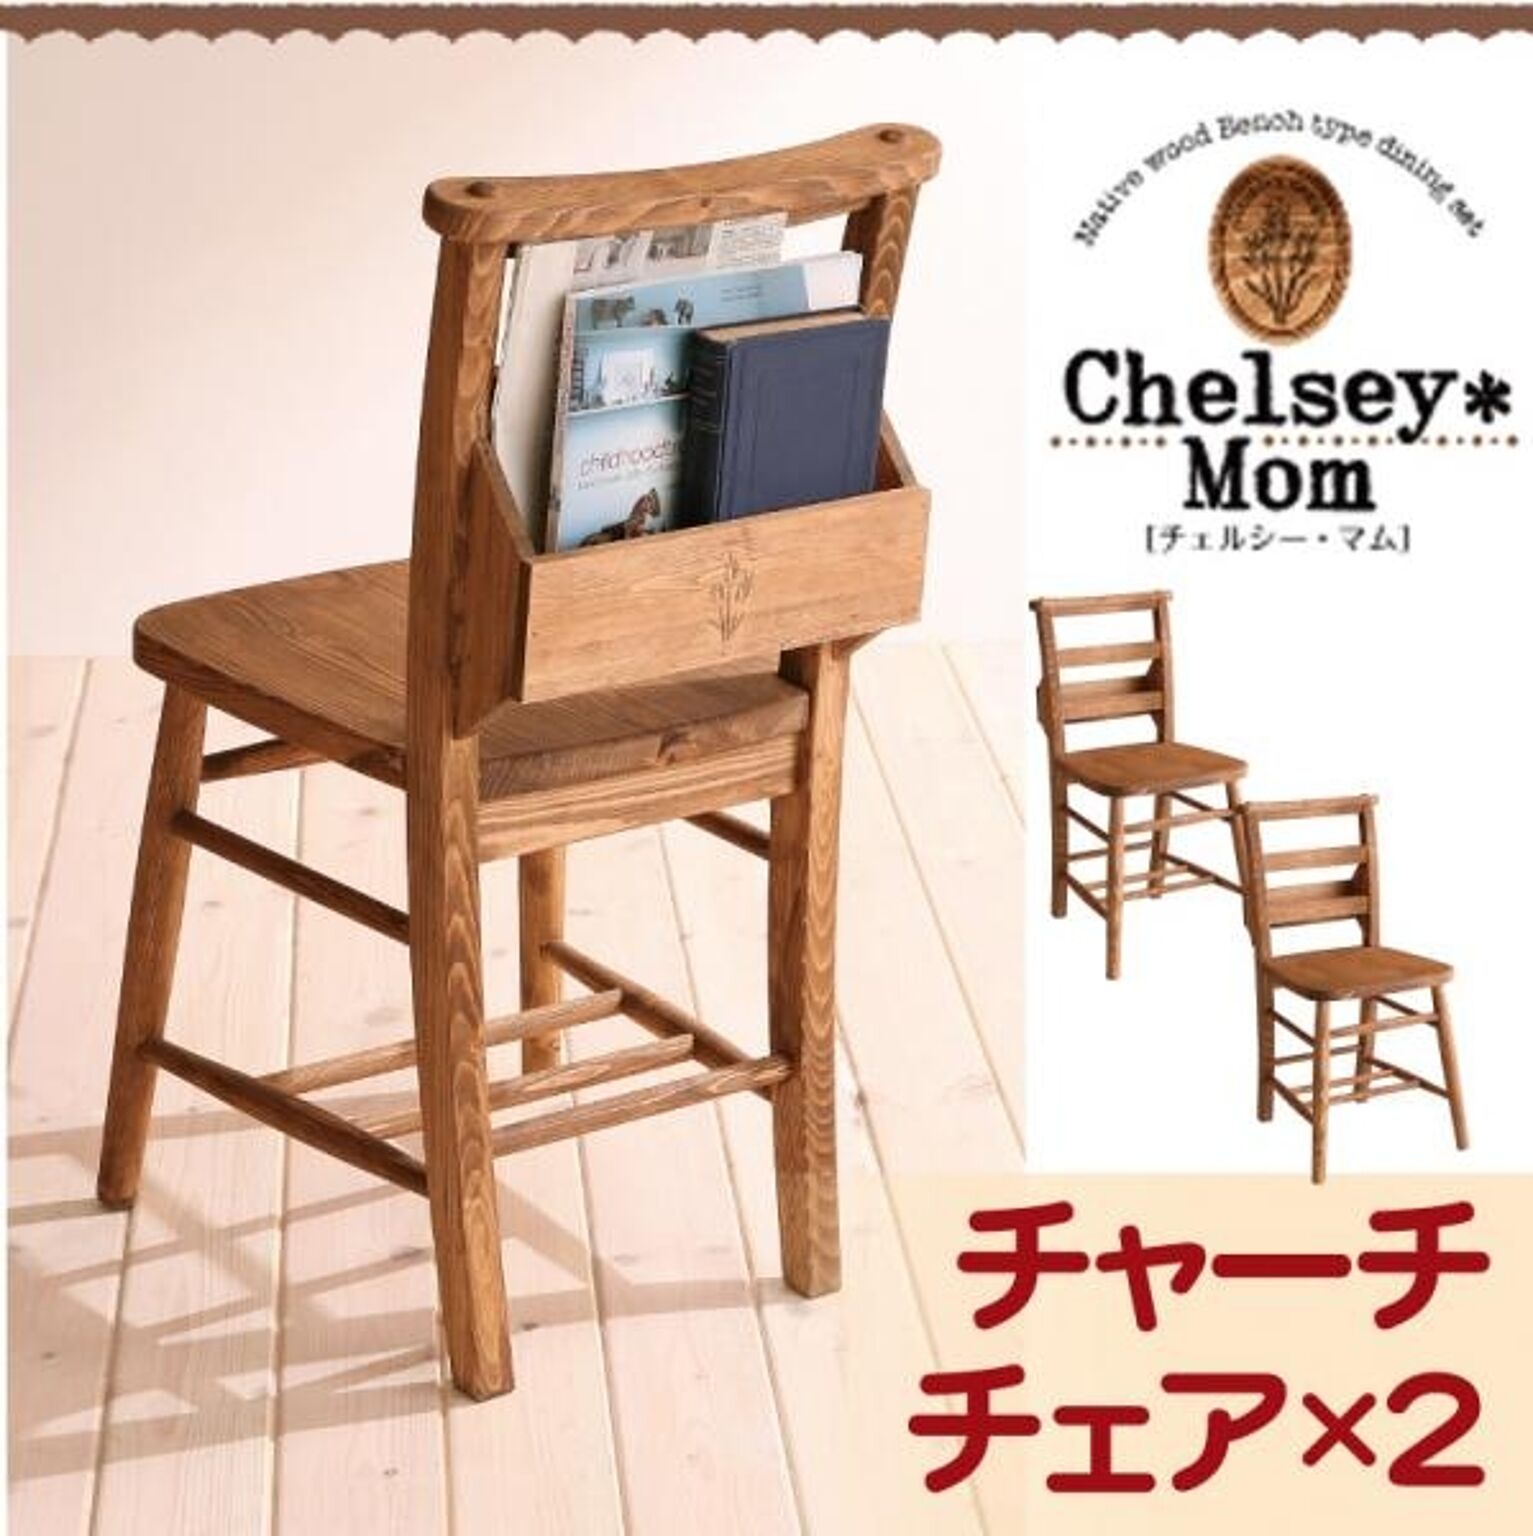 Chelsey*Mom 天然木カントリーデザイン ダイニングセット チャーチチェア2脚組